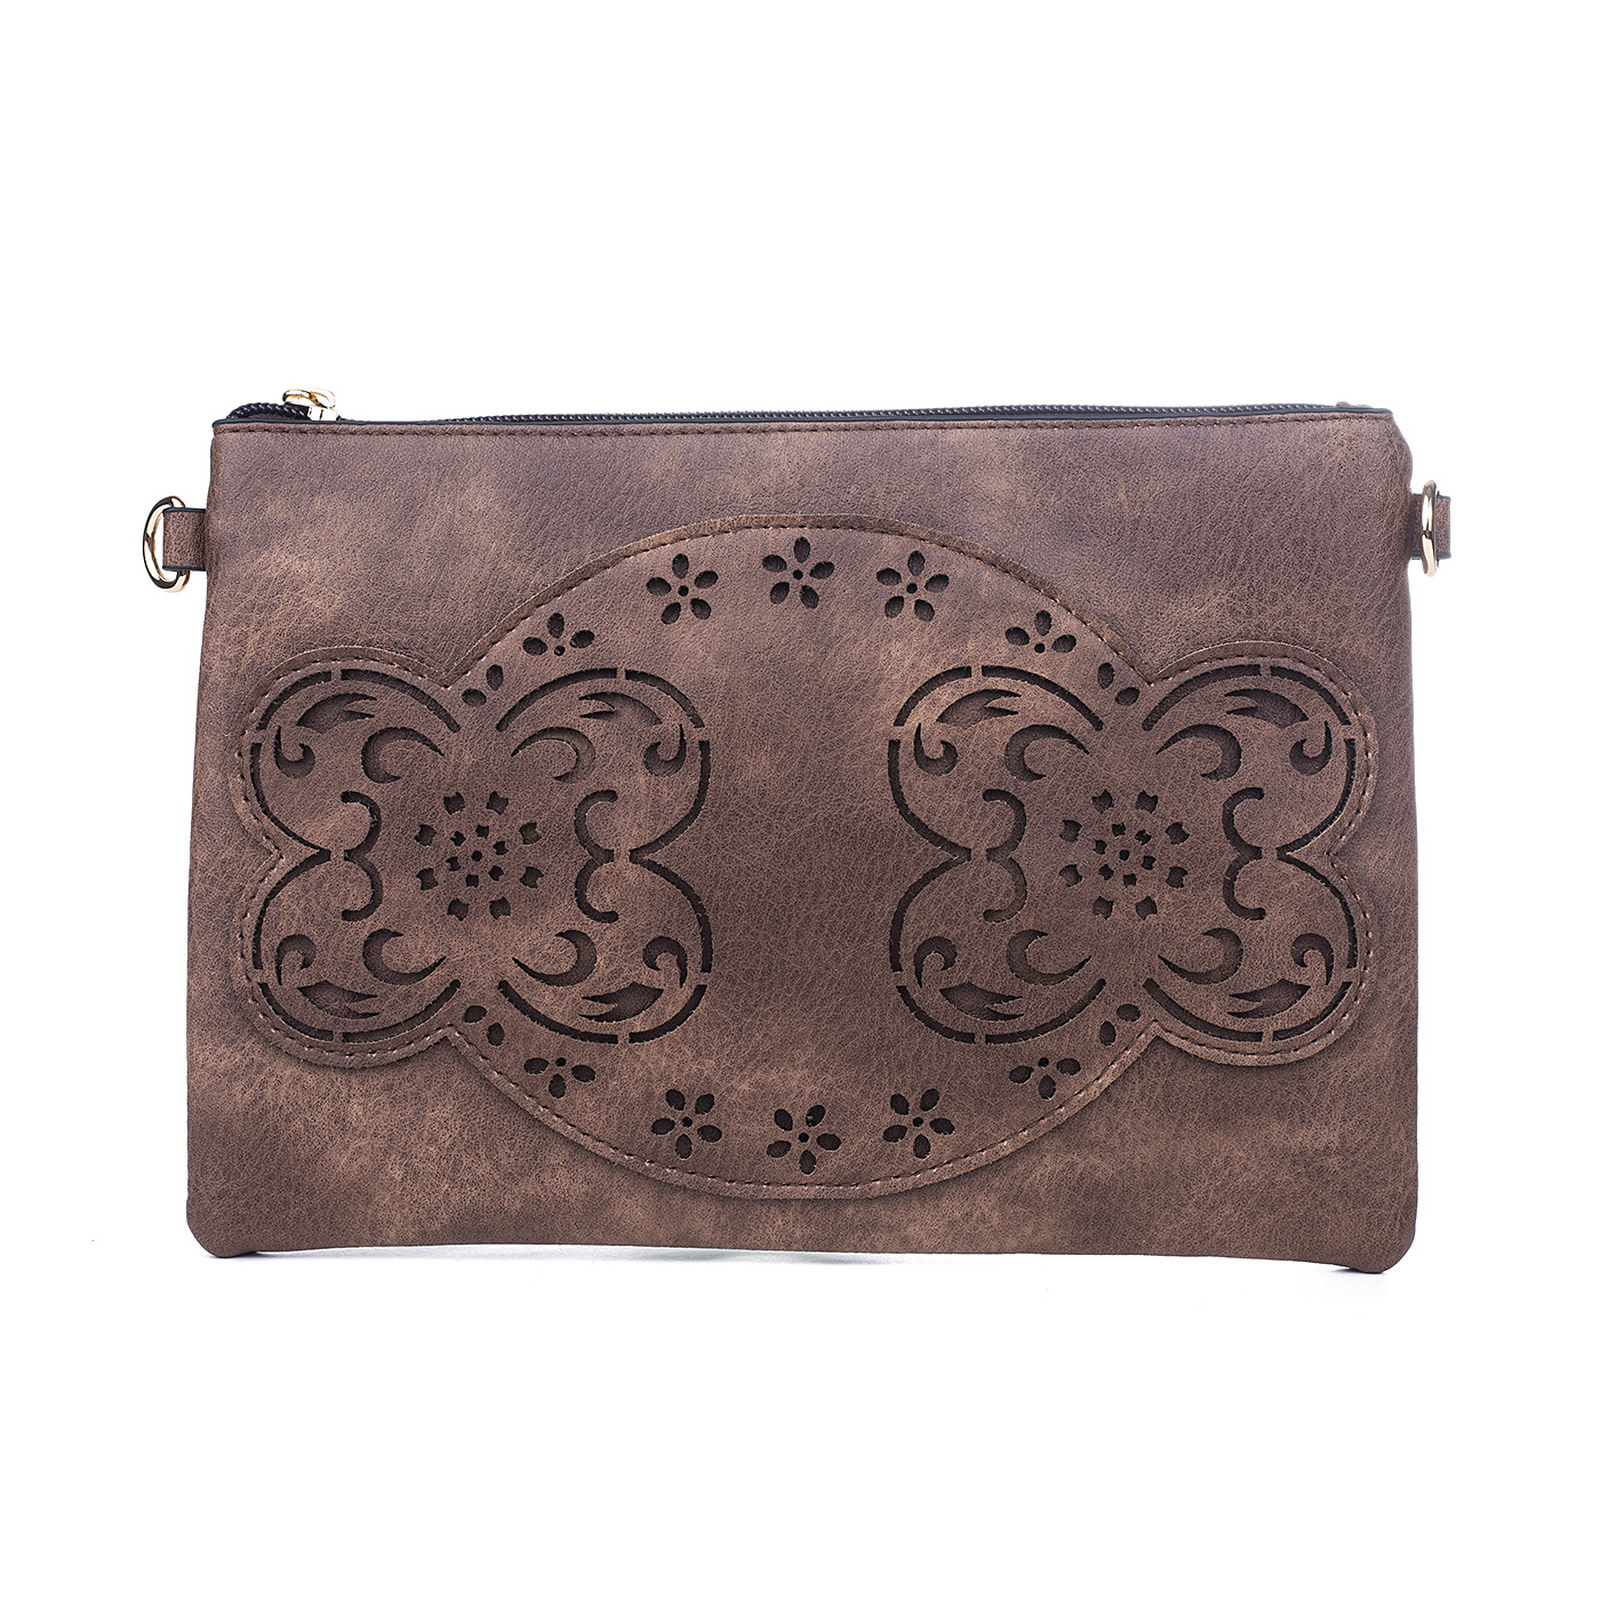 Ivys Clothing & Fashion Accessories Brown Crossover Handbag